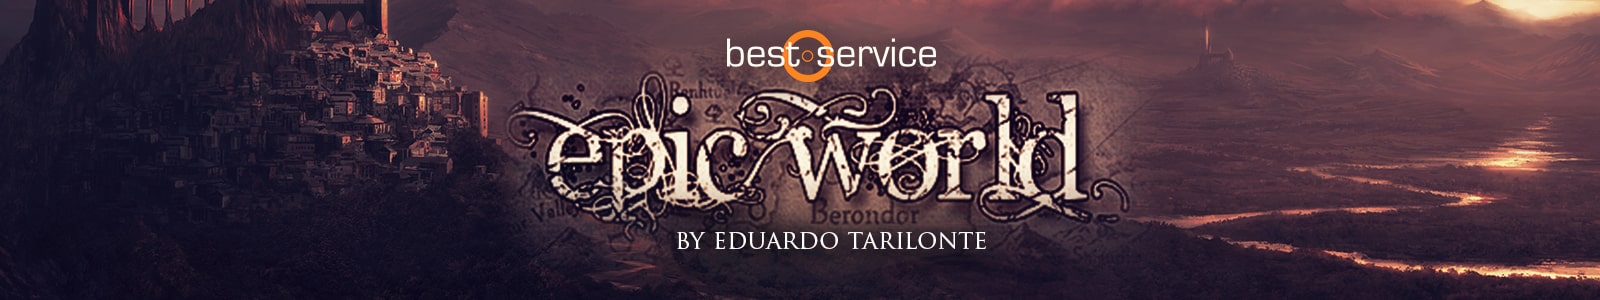 epic world by eduardo tarilonte